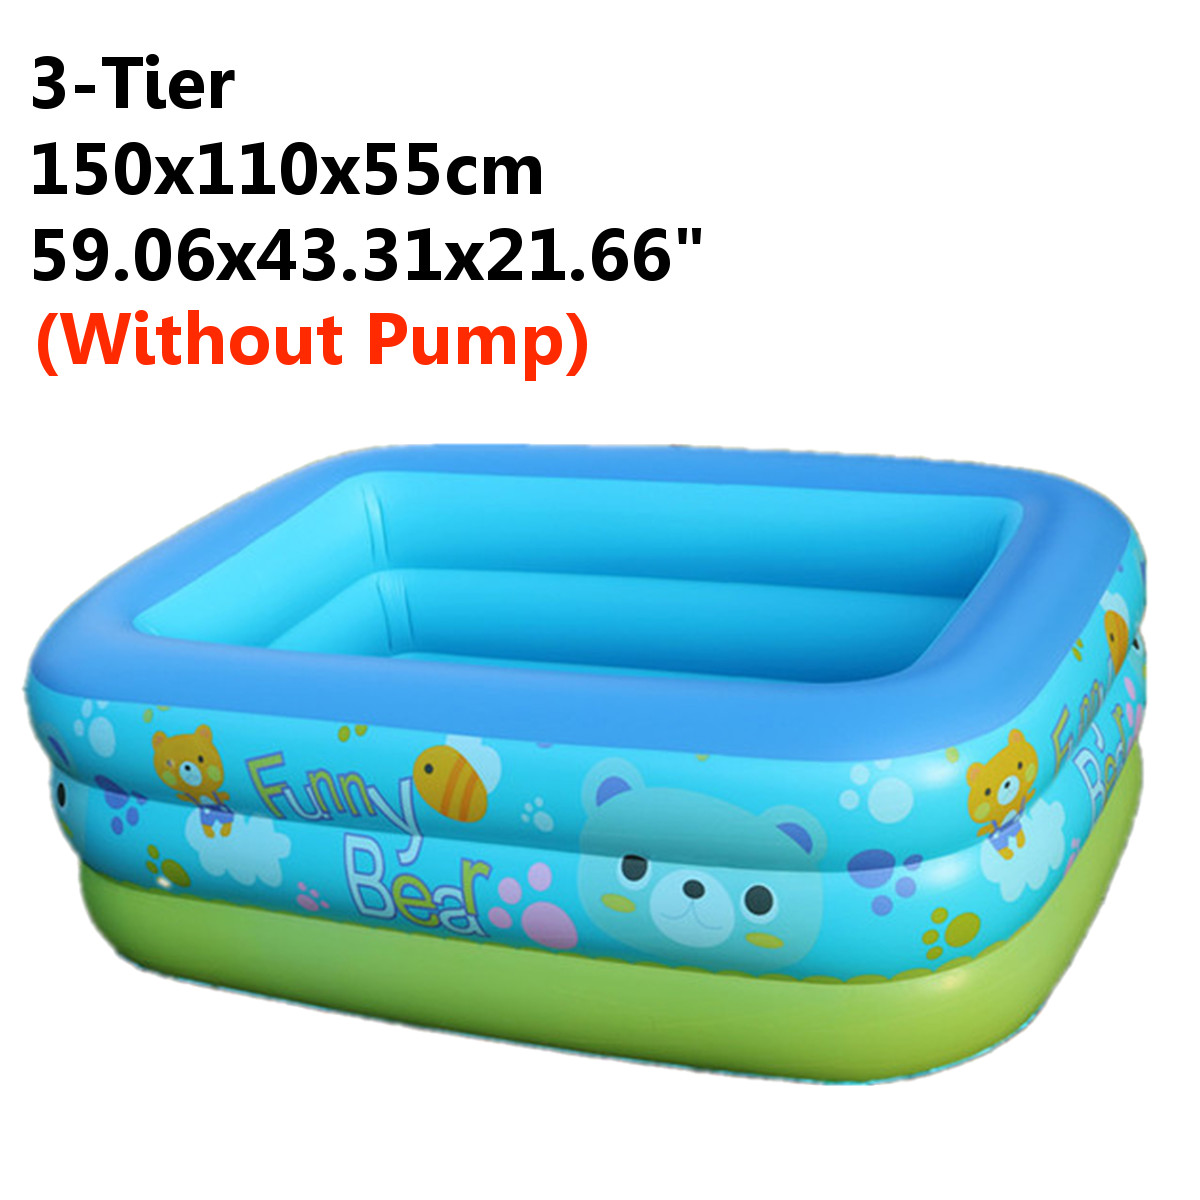 120130150CM-Inflatable-Baby-Swimming-Pool-Kids-Pool-Bathing-Tub-Outdoor-Indoor-Swimming-Pool-1484985-2